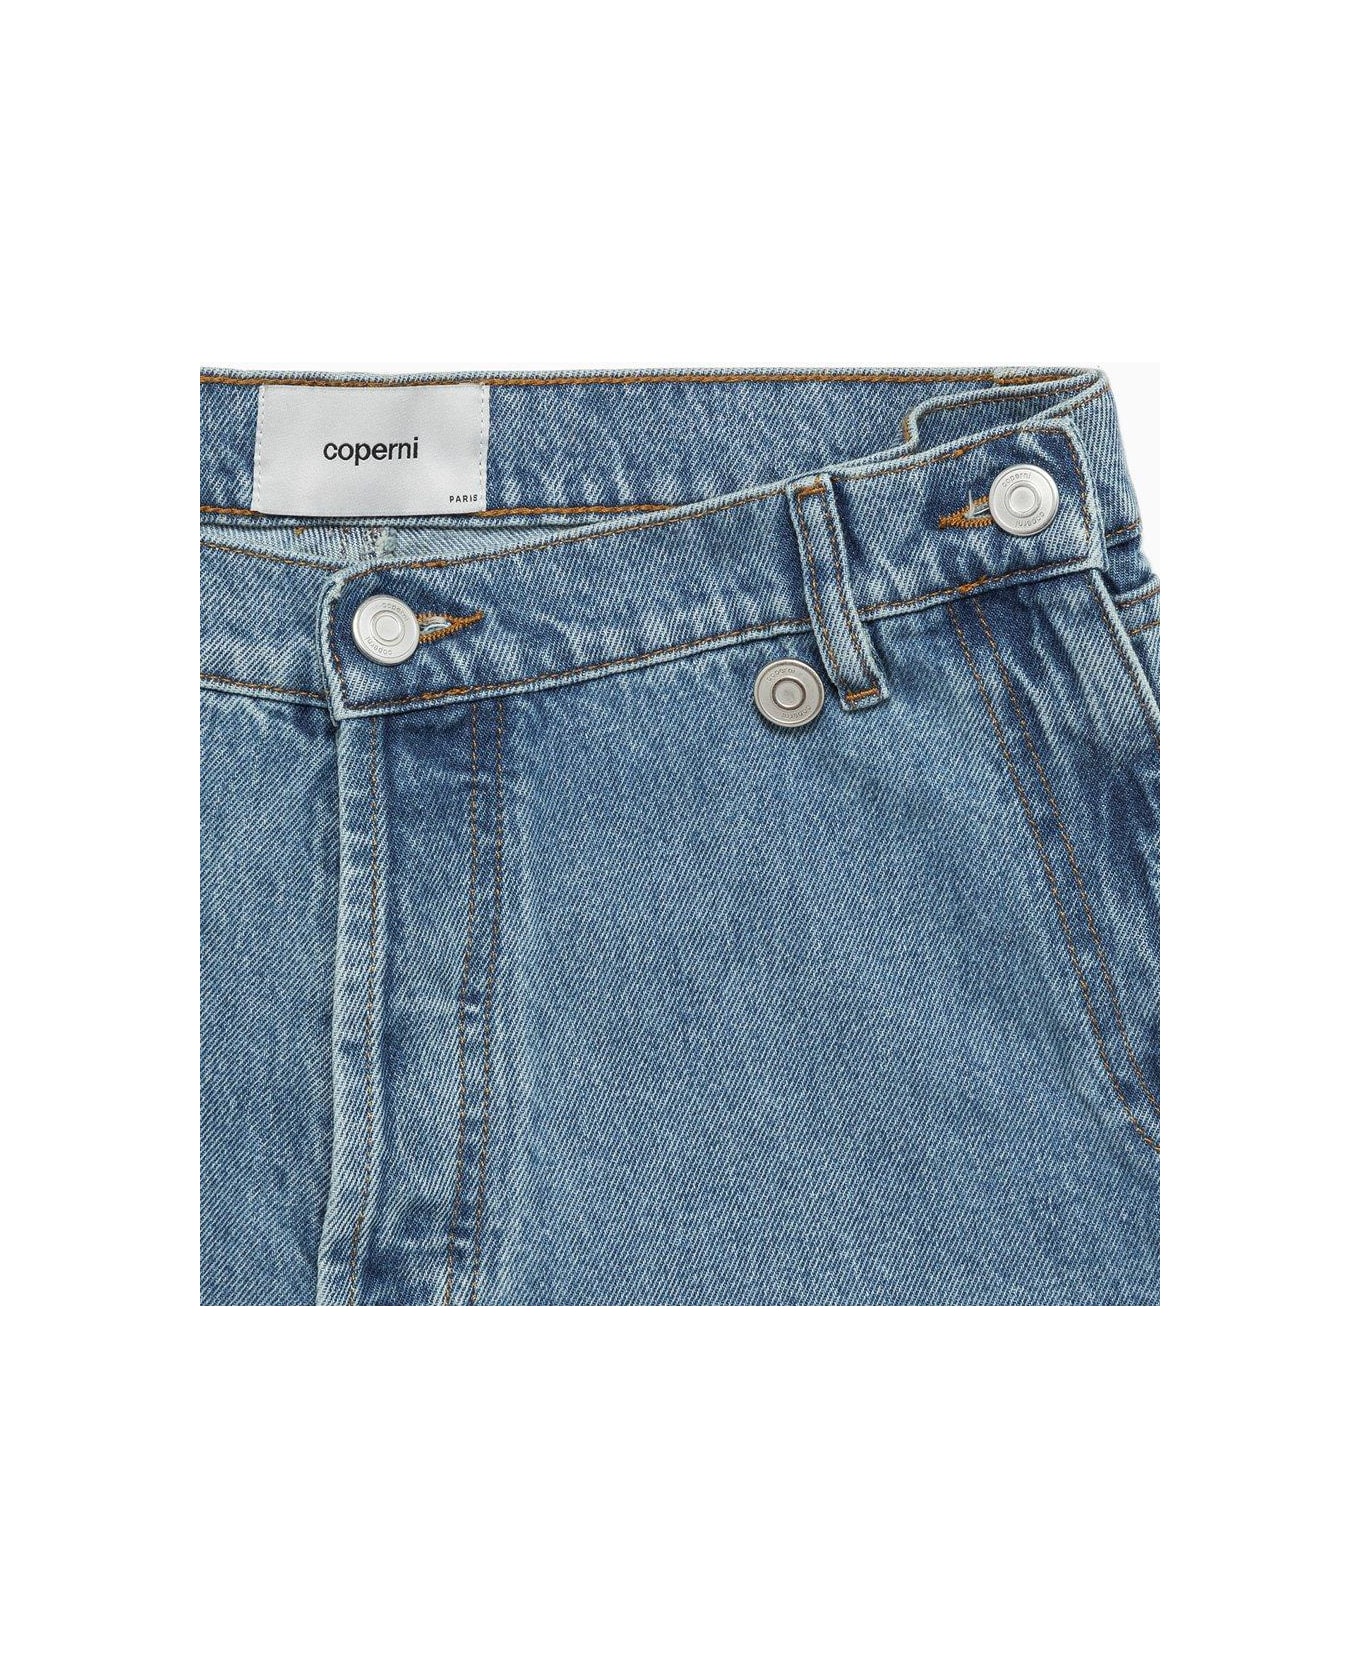 Coperni Button Detailed Denim Shorts - BLUE